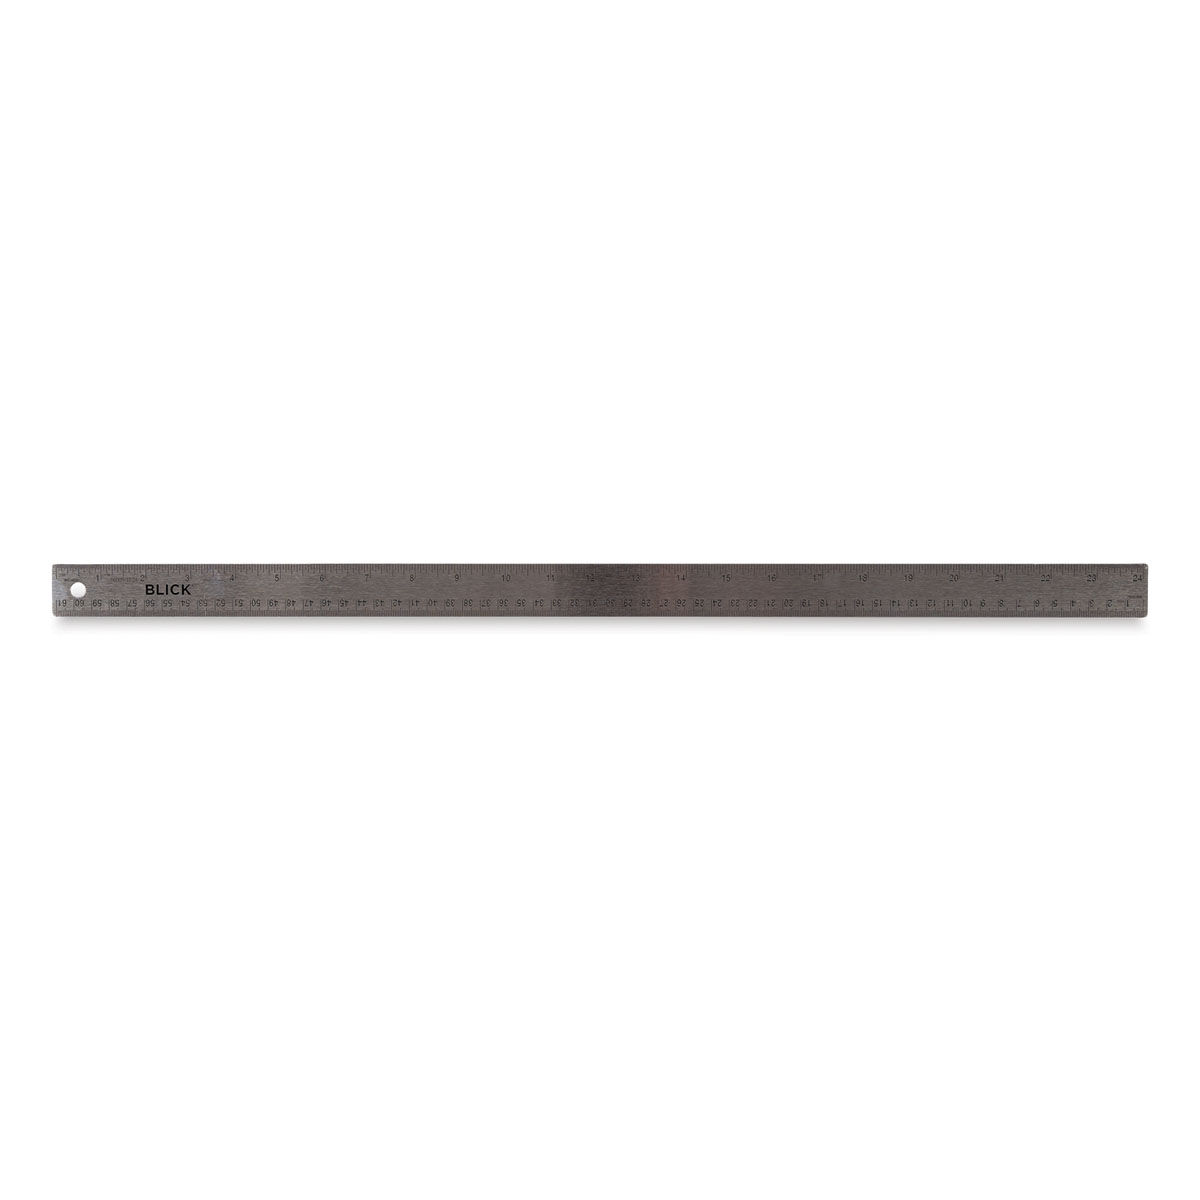 Steel ruler stainless steel ruler thickened steel ruler 15/20/30/50